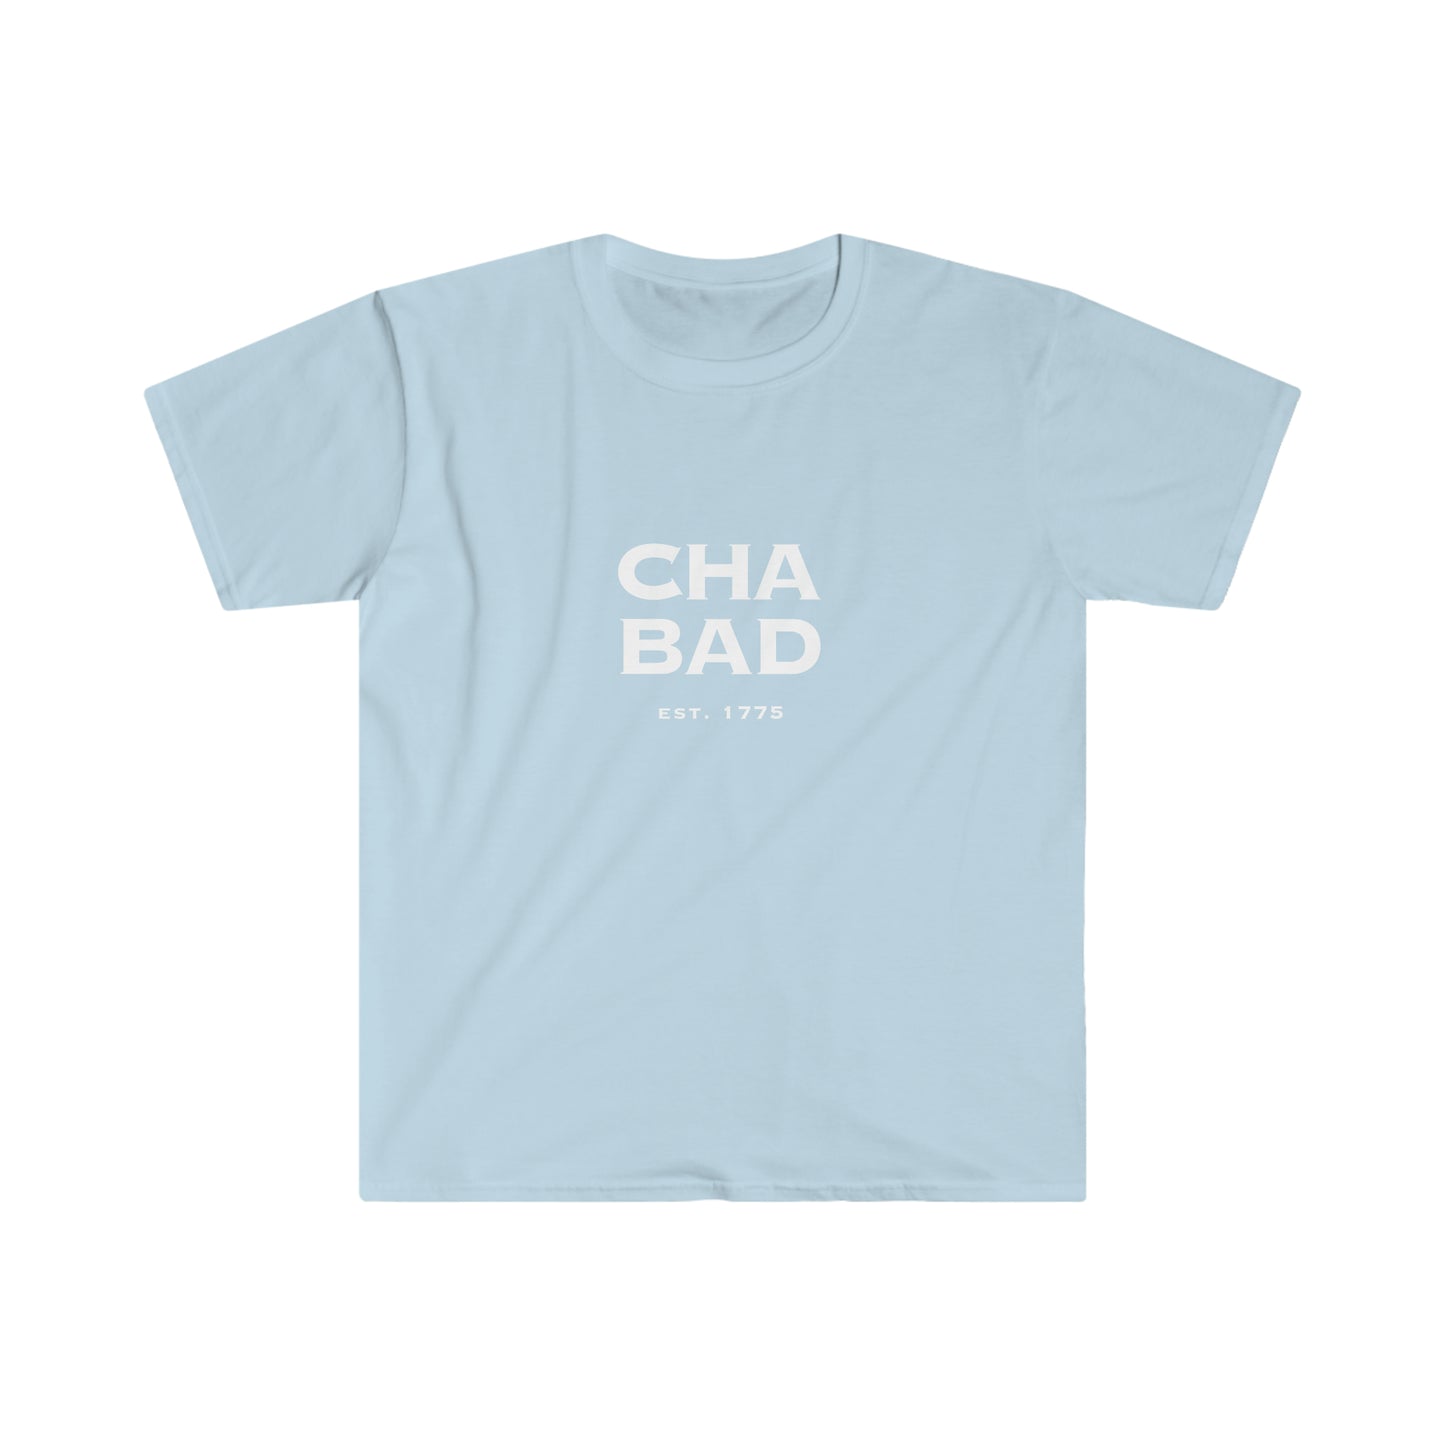 CHABAD Signature t-shirt (6 colors)